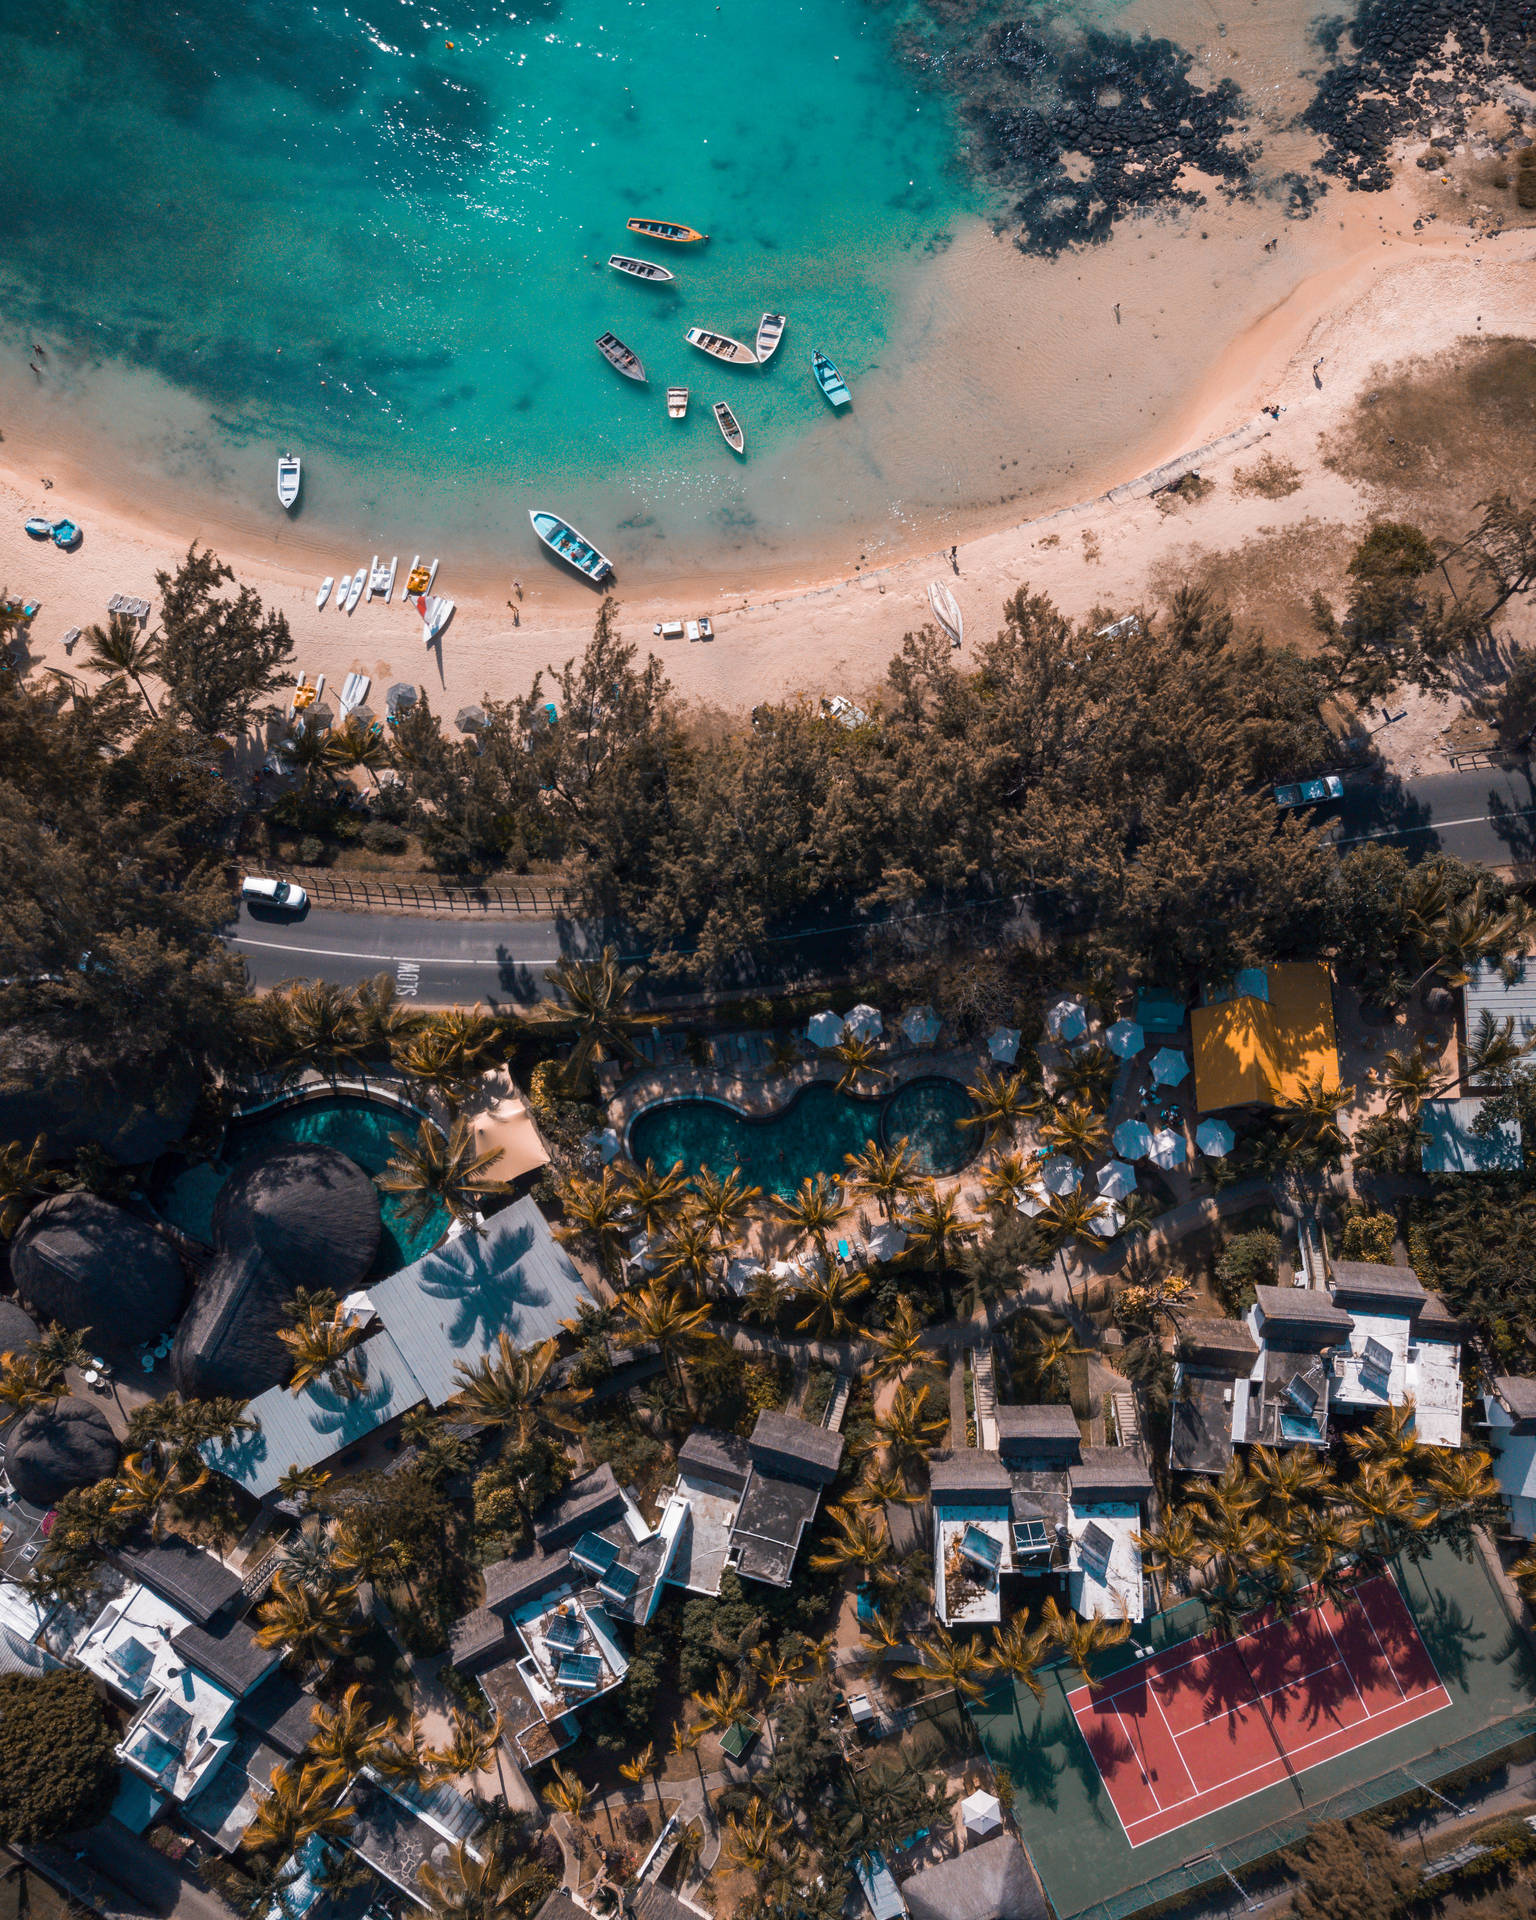 Mauritius Island Houses And Boats